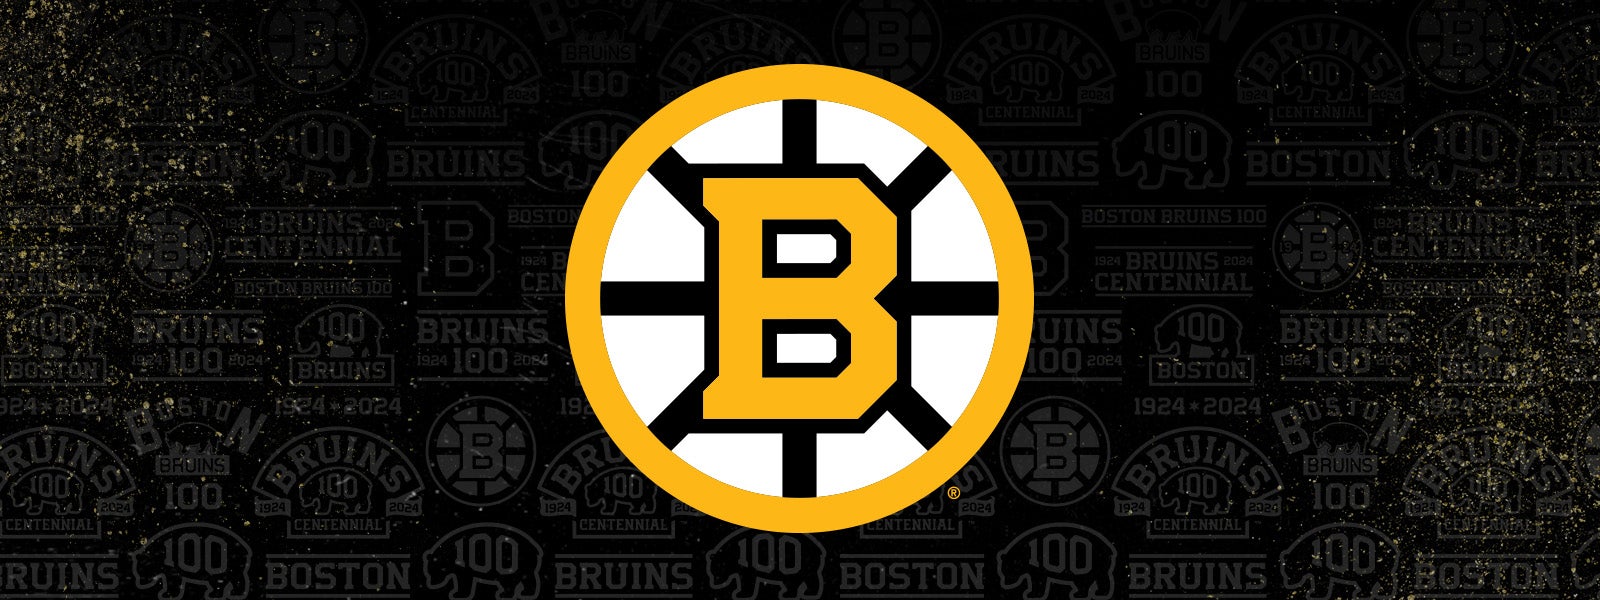 Bruins blank Devils in home opener at TD Garden